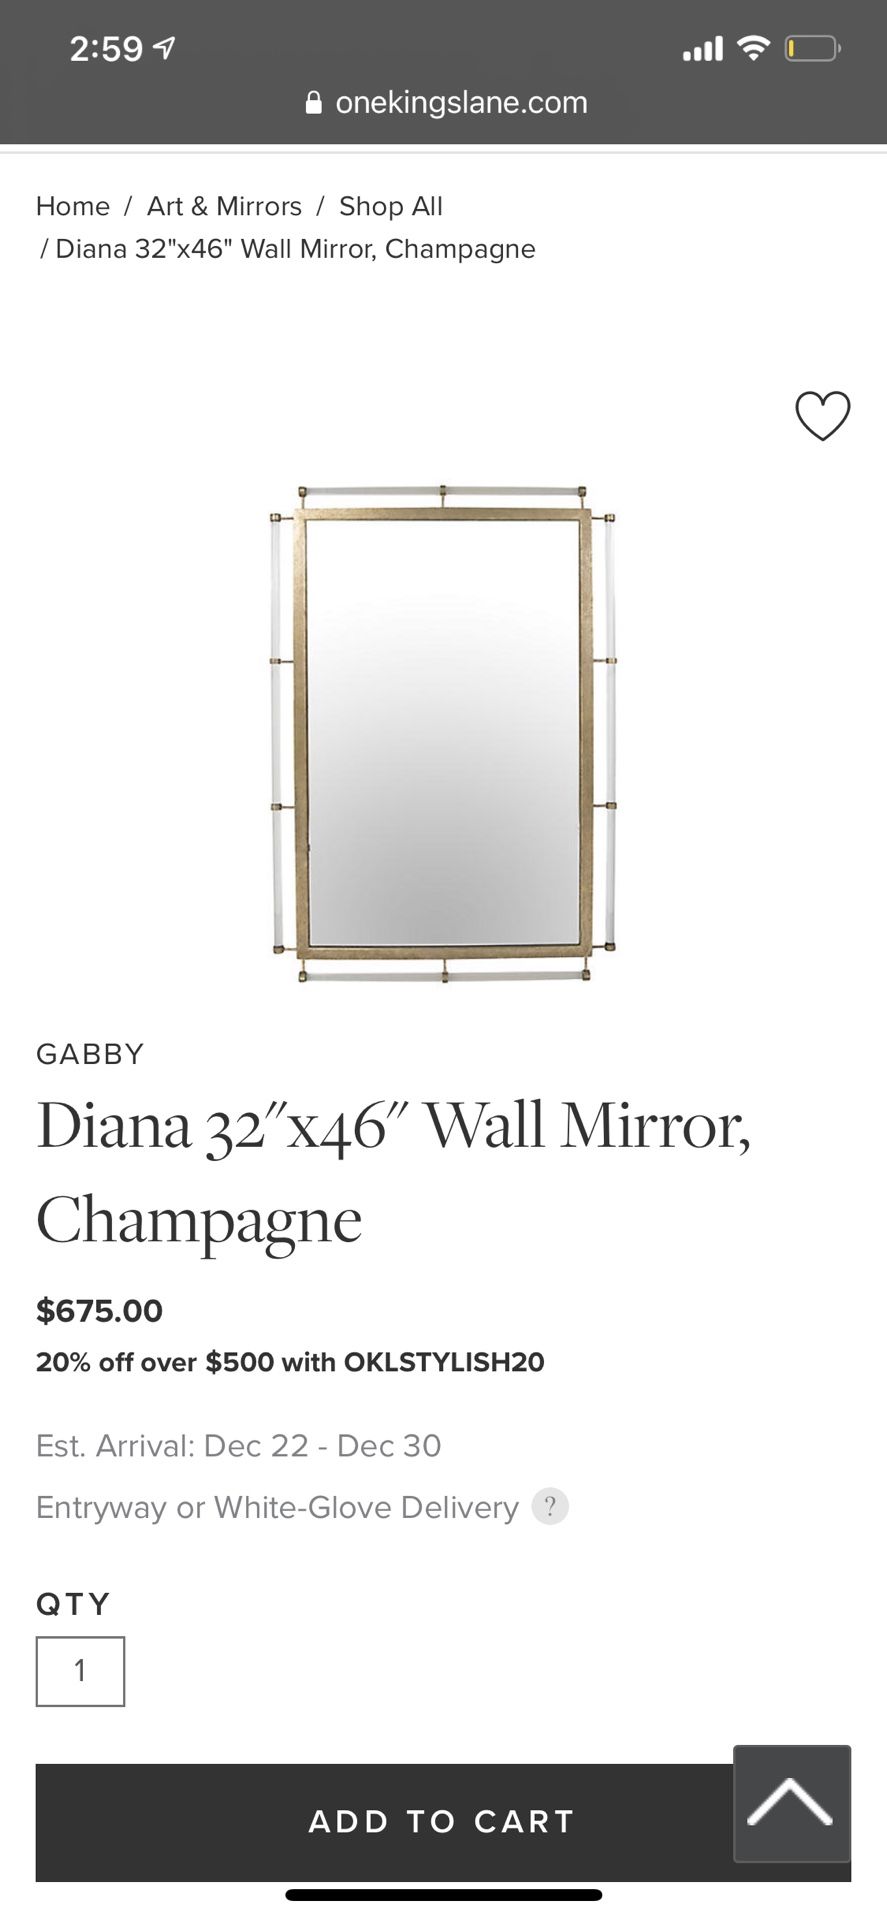 GABBY Diana 32"x46" Wall Mirror, Champagne